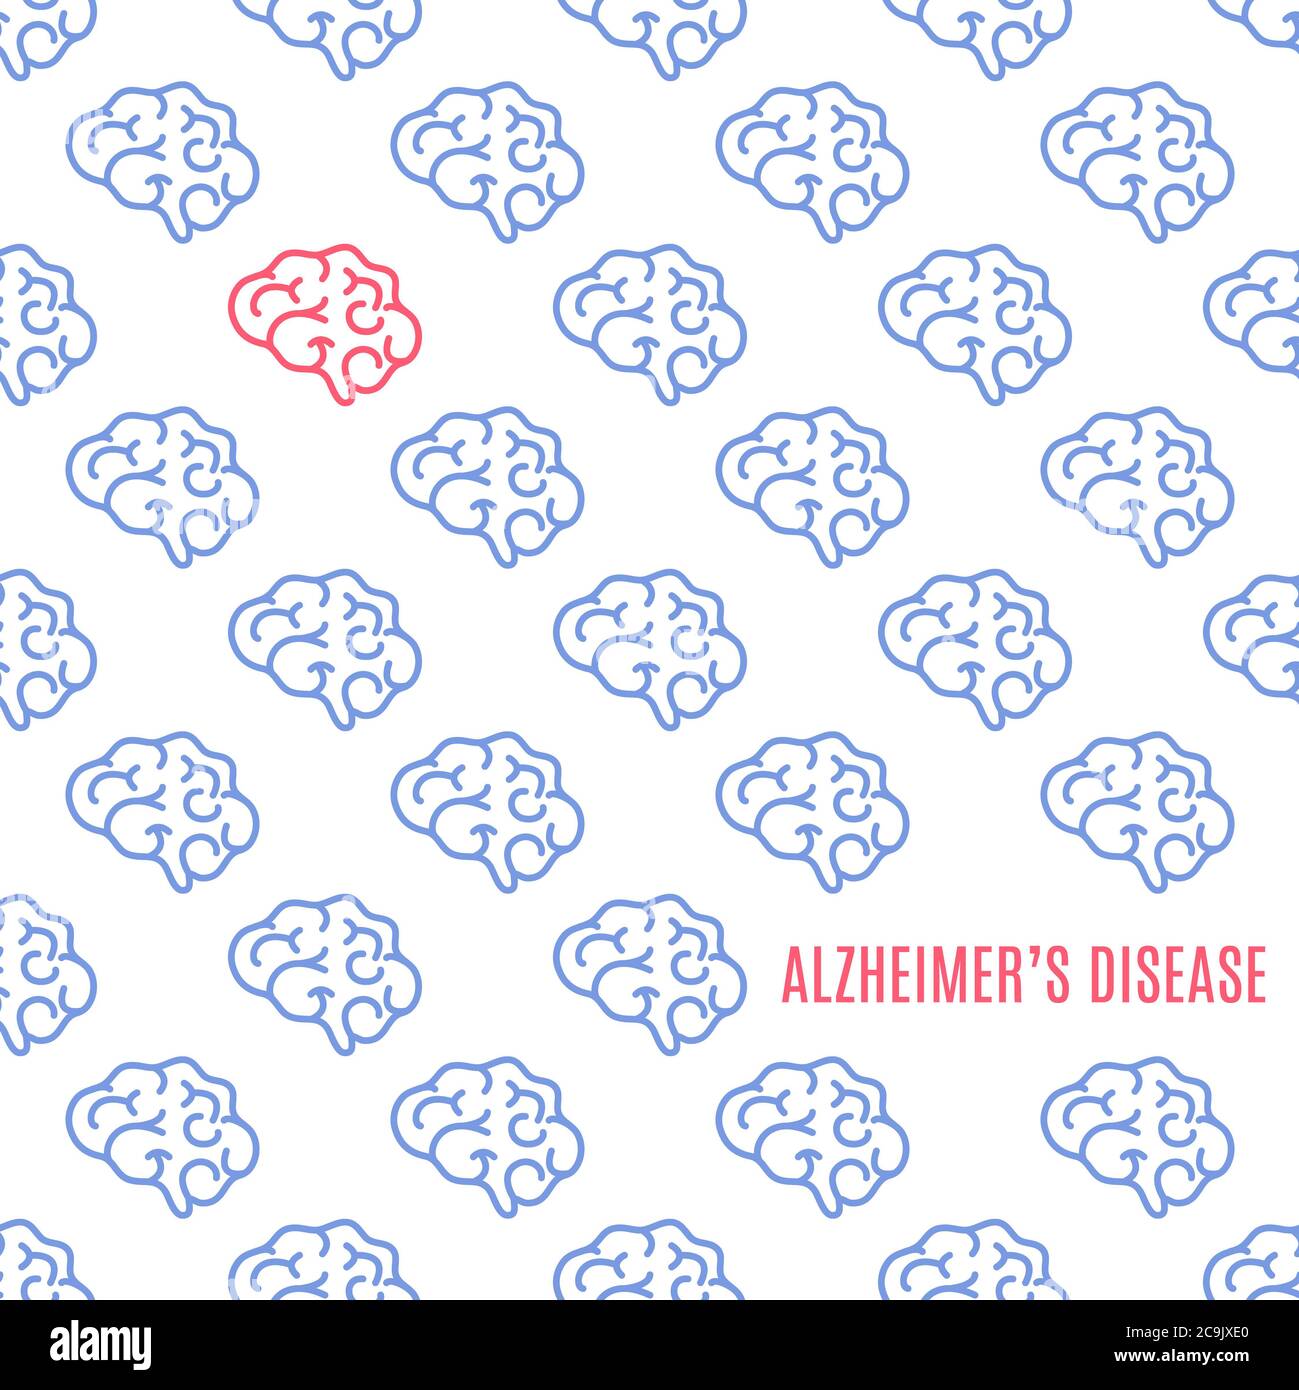 Alzheimer's disease, conceptual illustration. Stock Photo